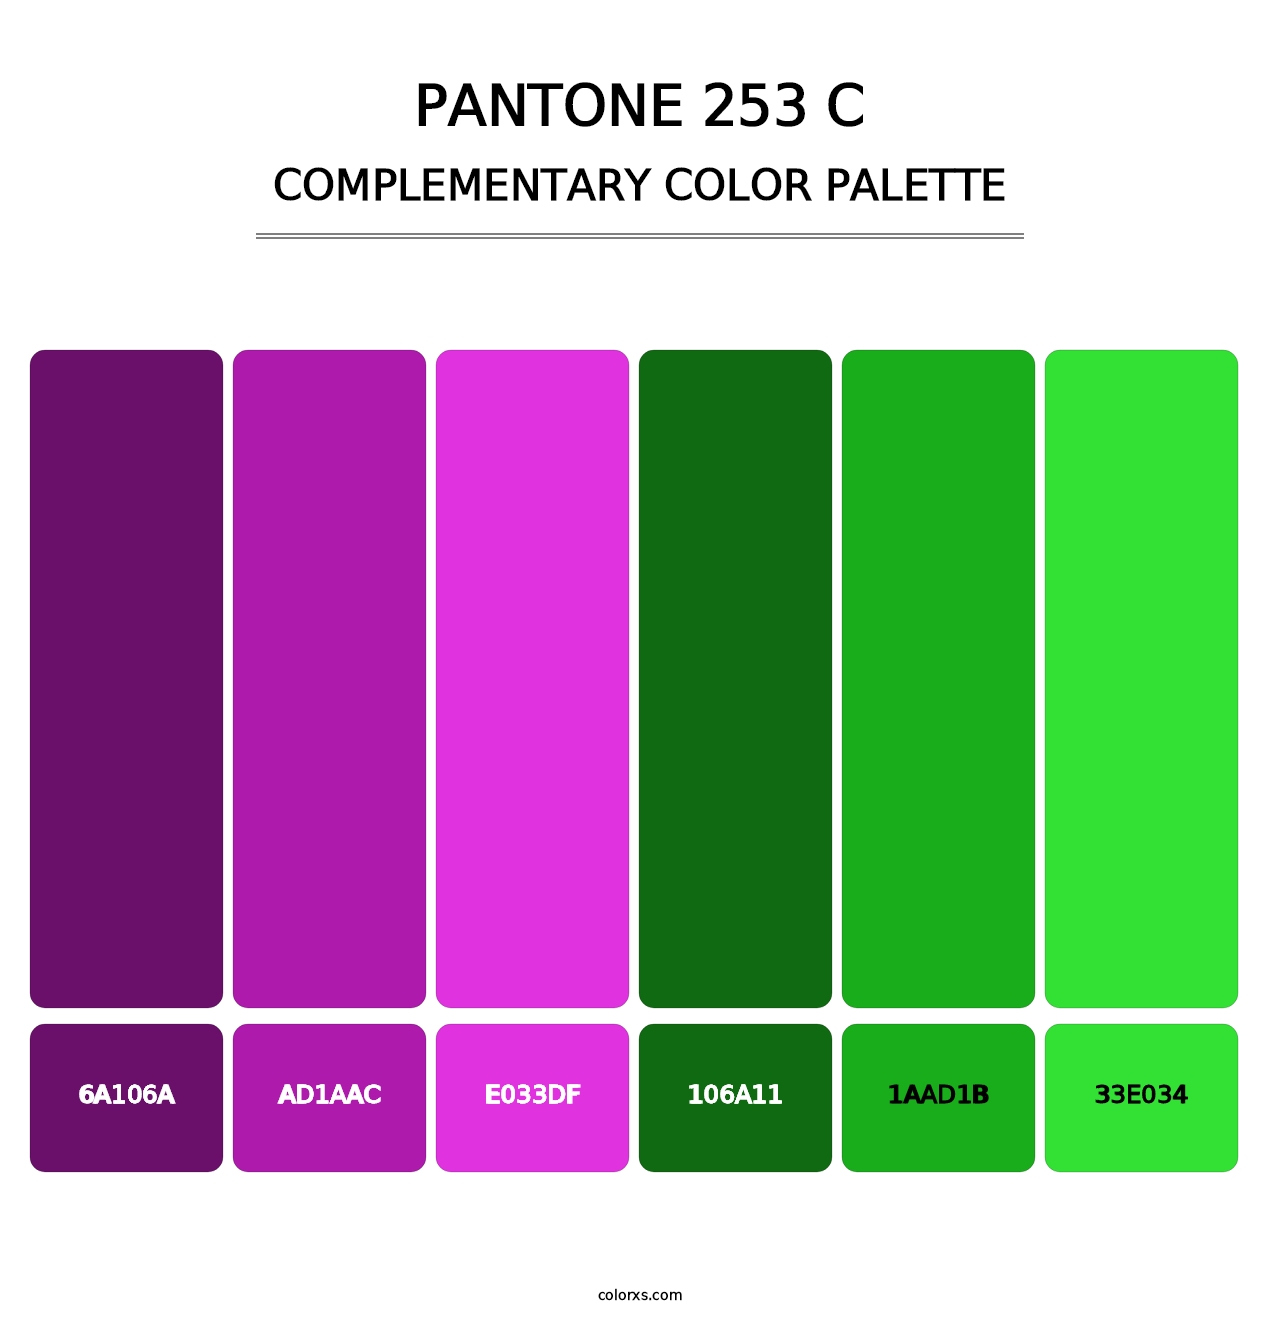 PANTONE 253 C - Complementary Color Palette